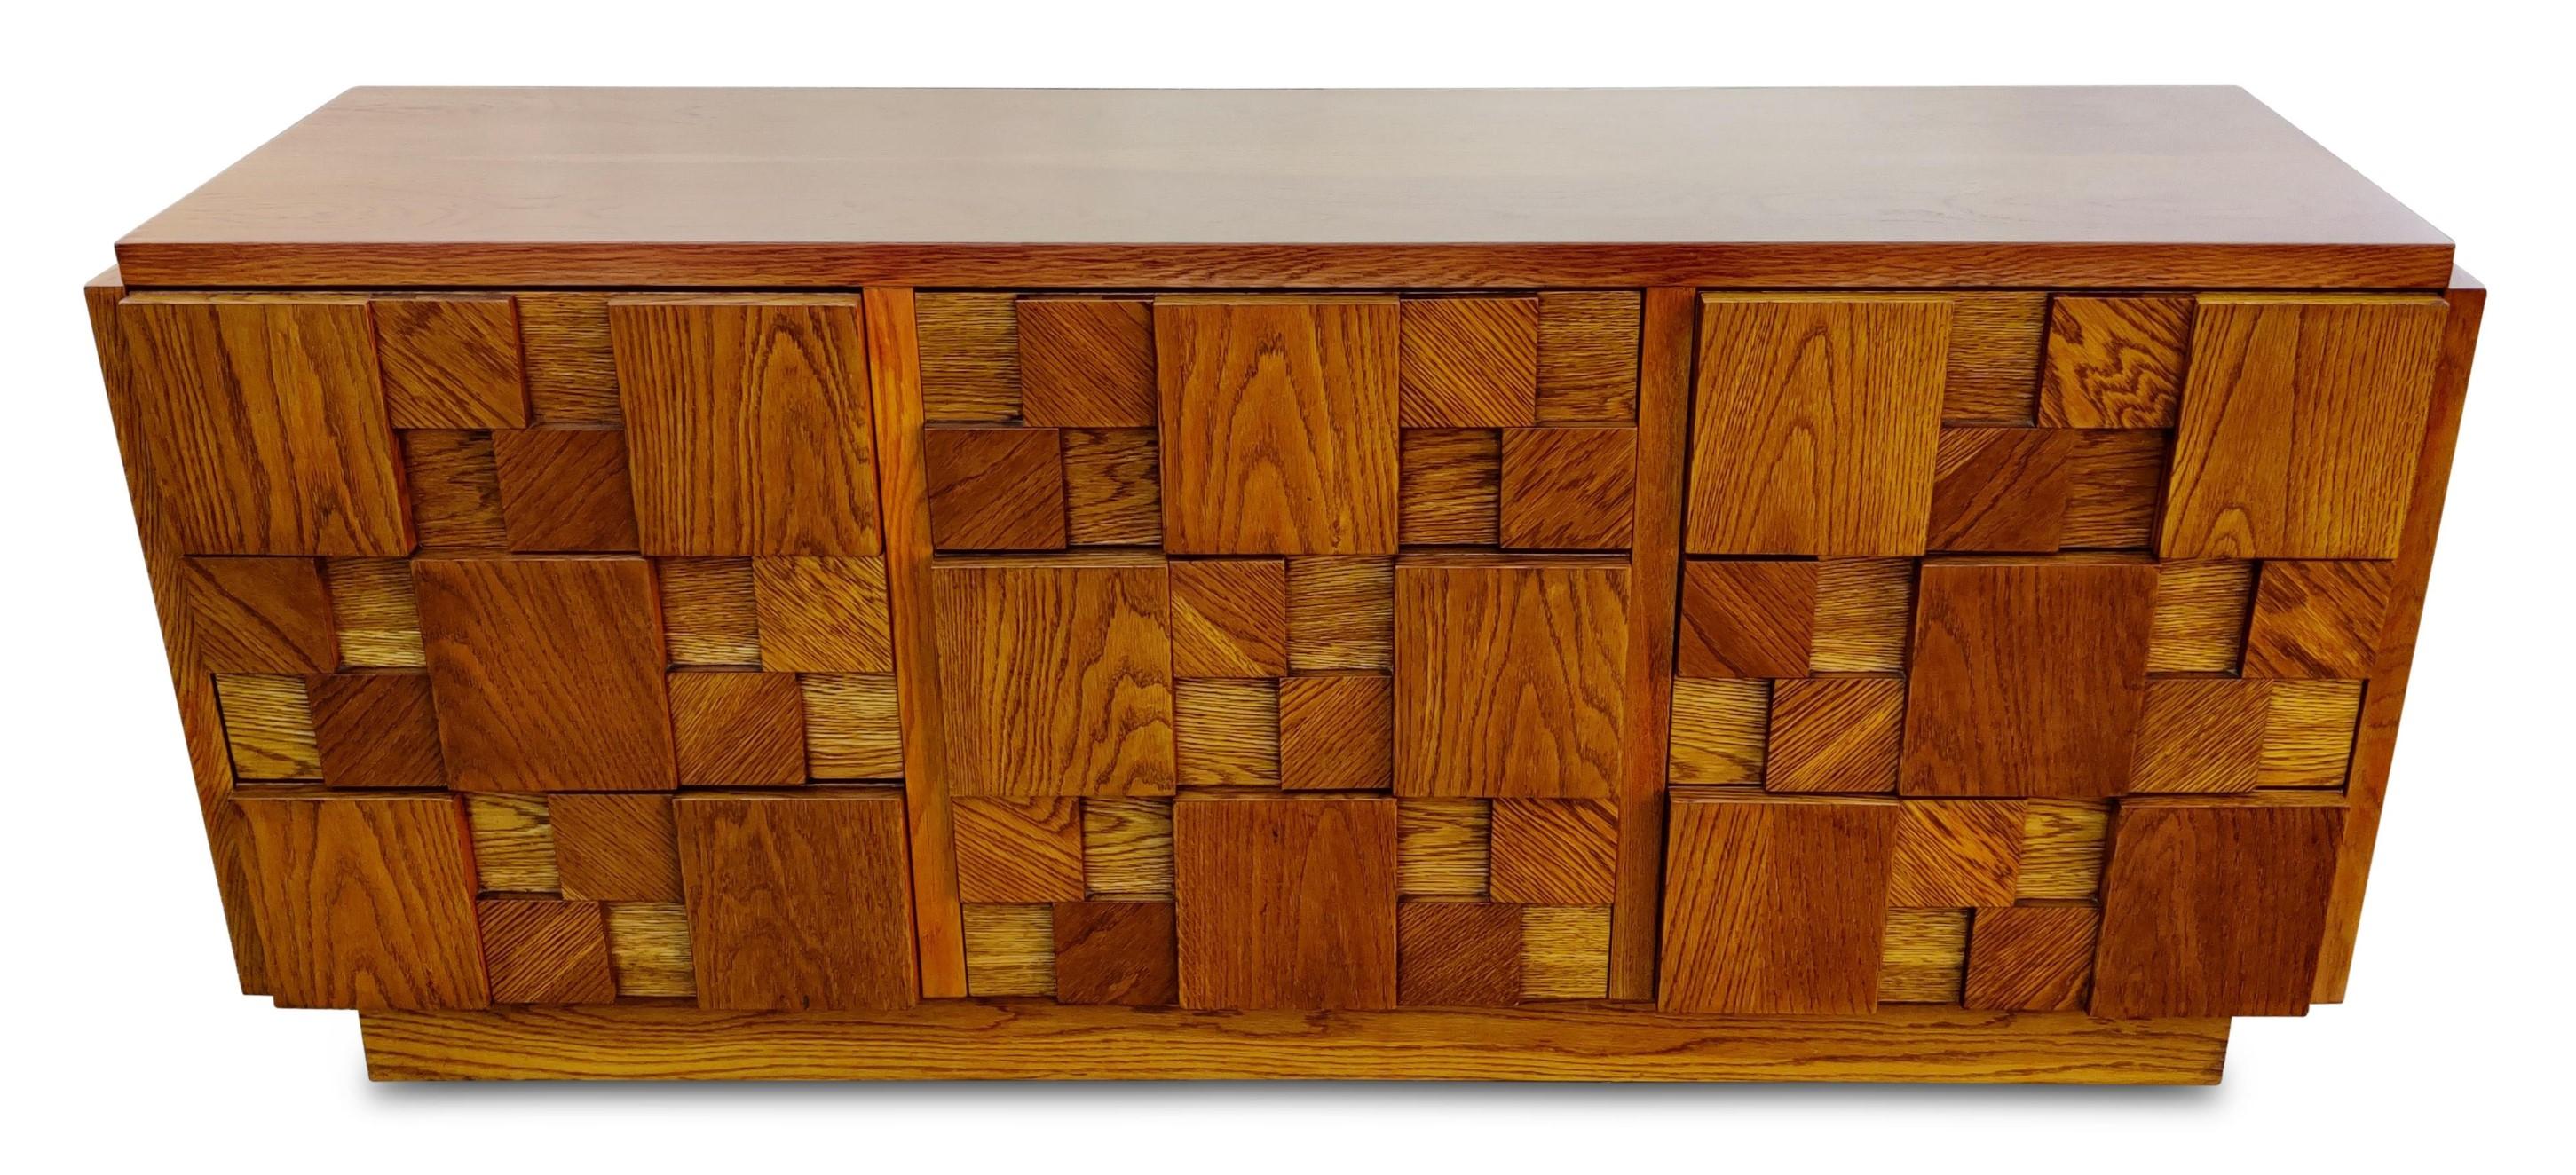 American Paul Evans Style Lane Brutalist Mosaic Dresser 1970s Mid-Century Modern